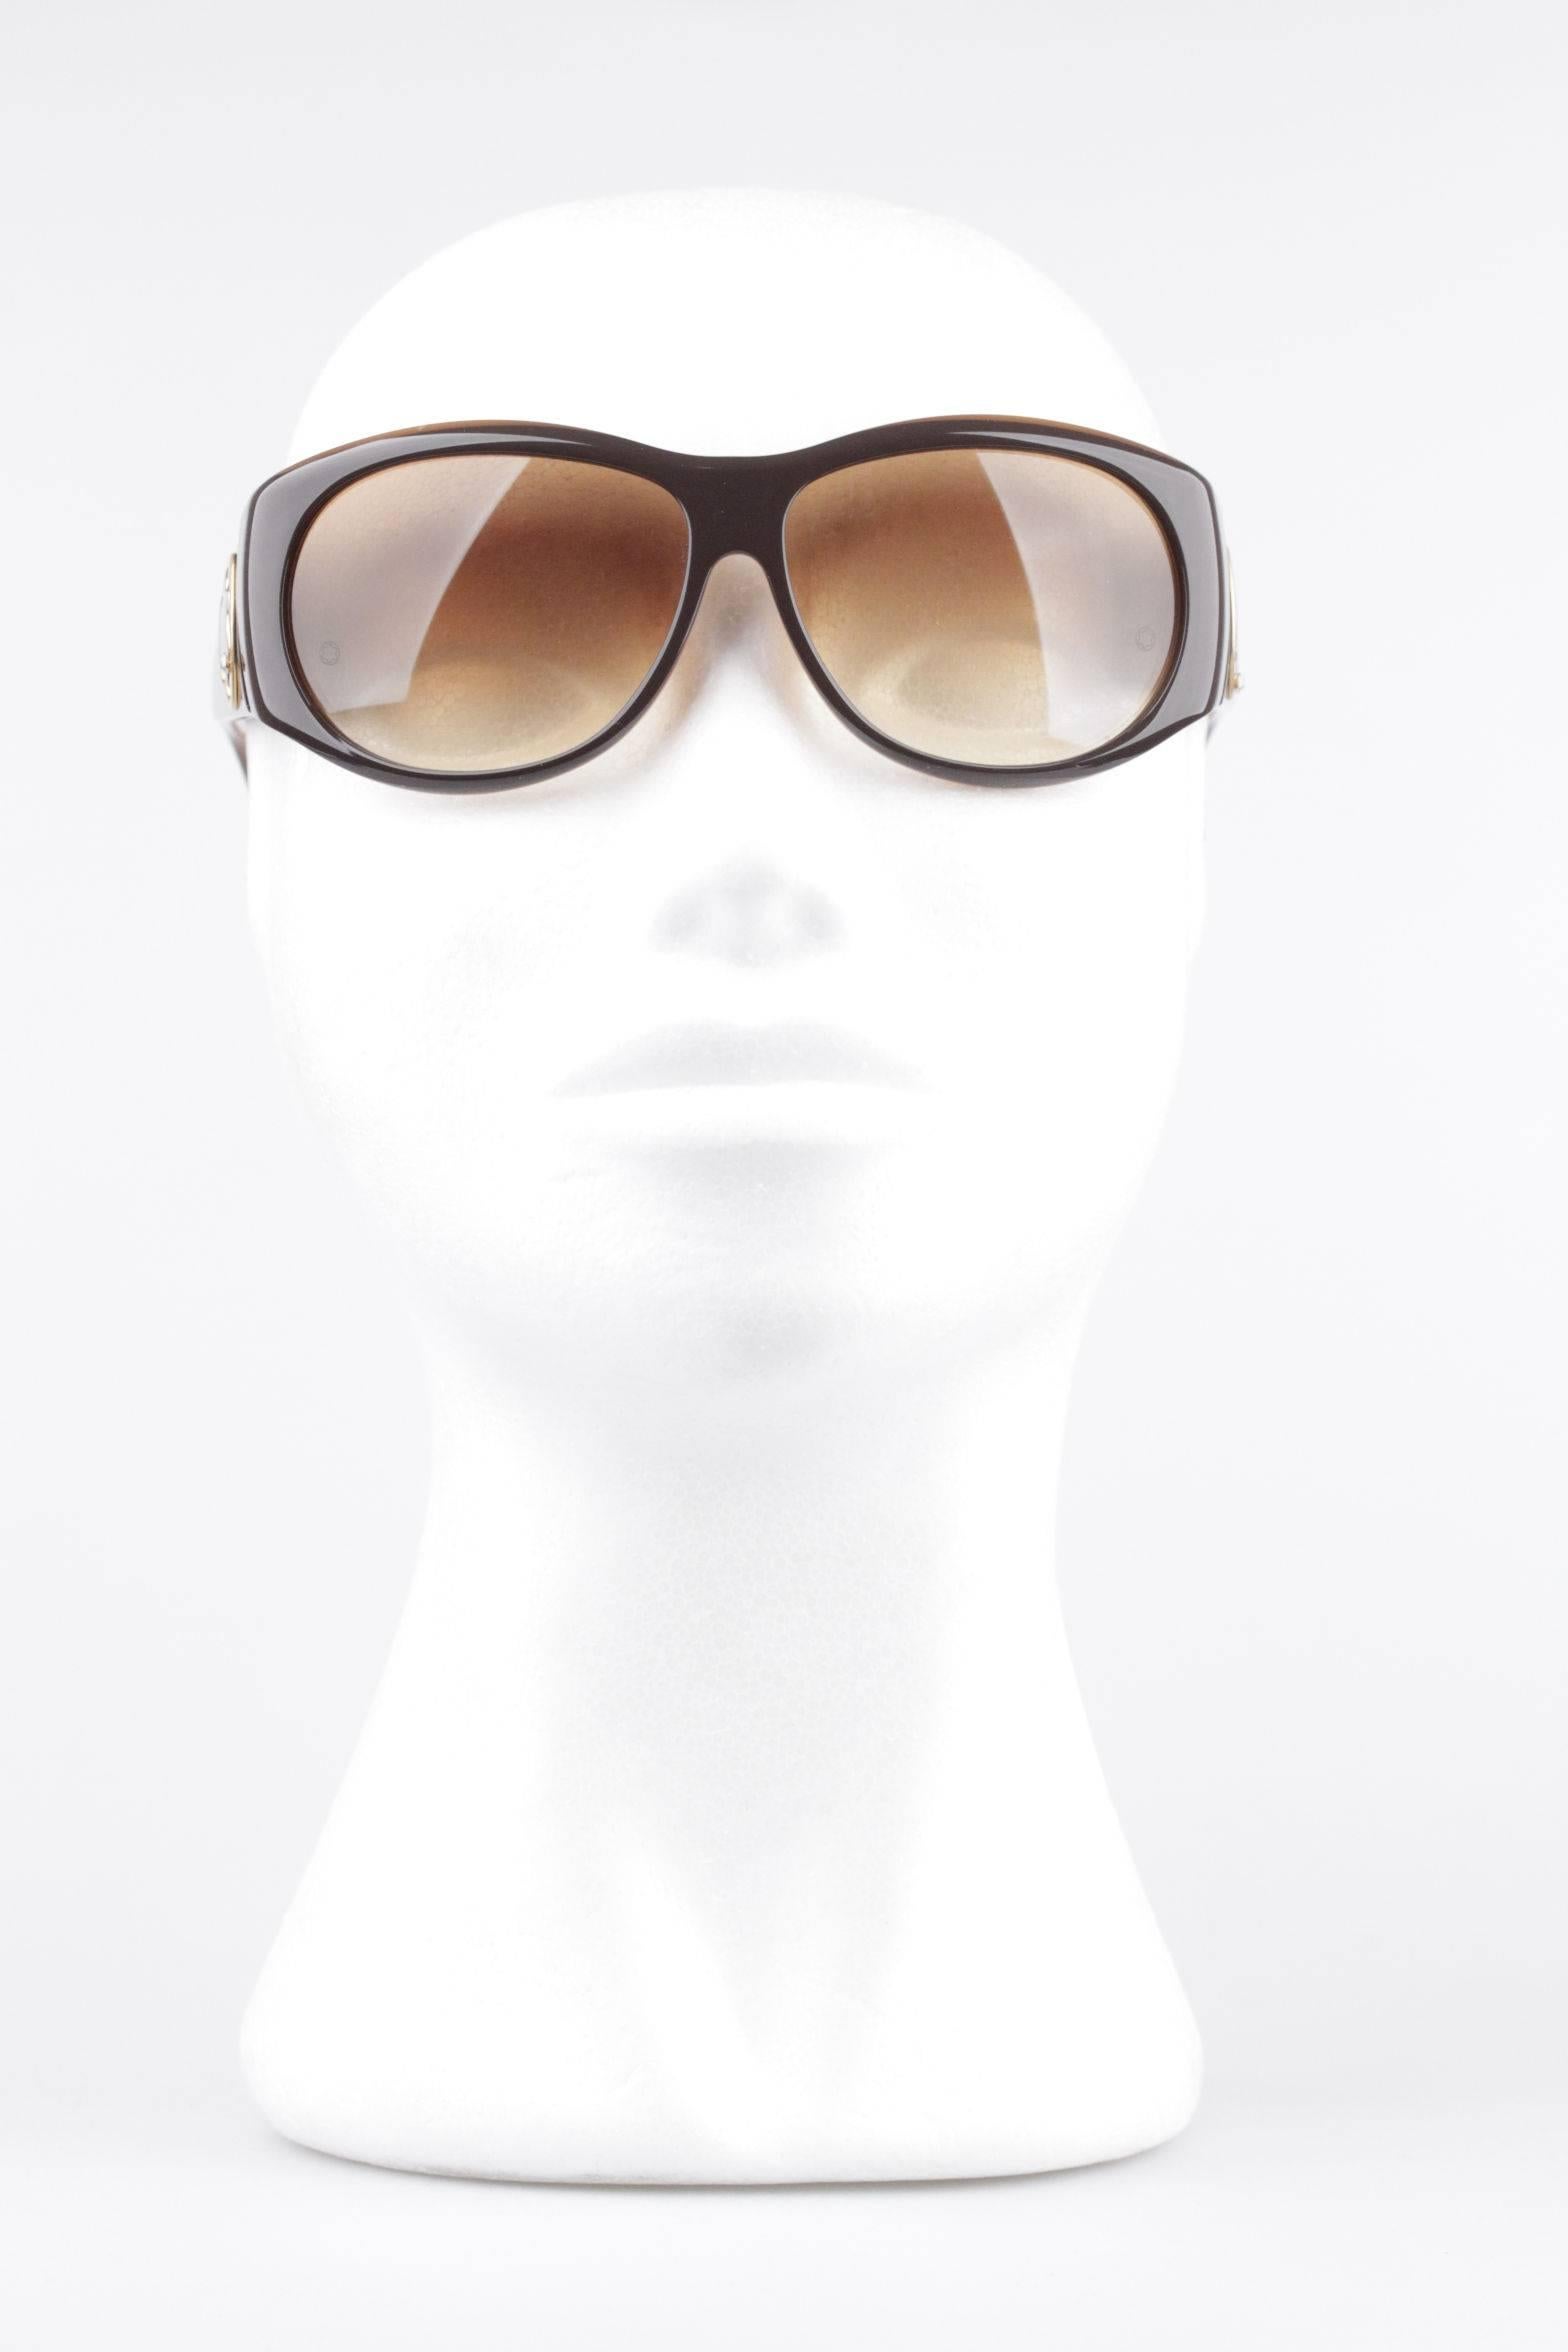 mont blanc sunglasses women's